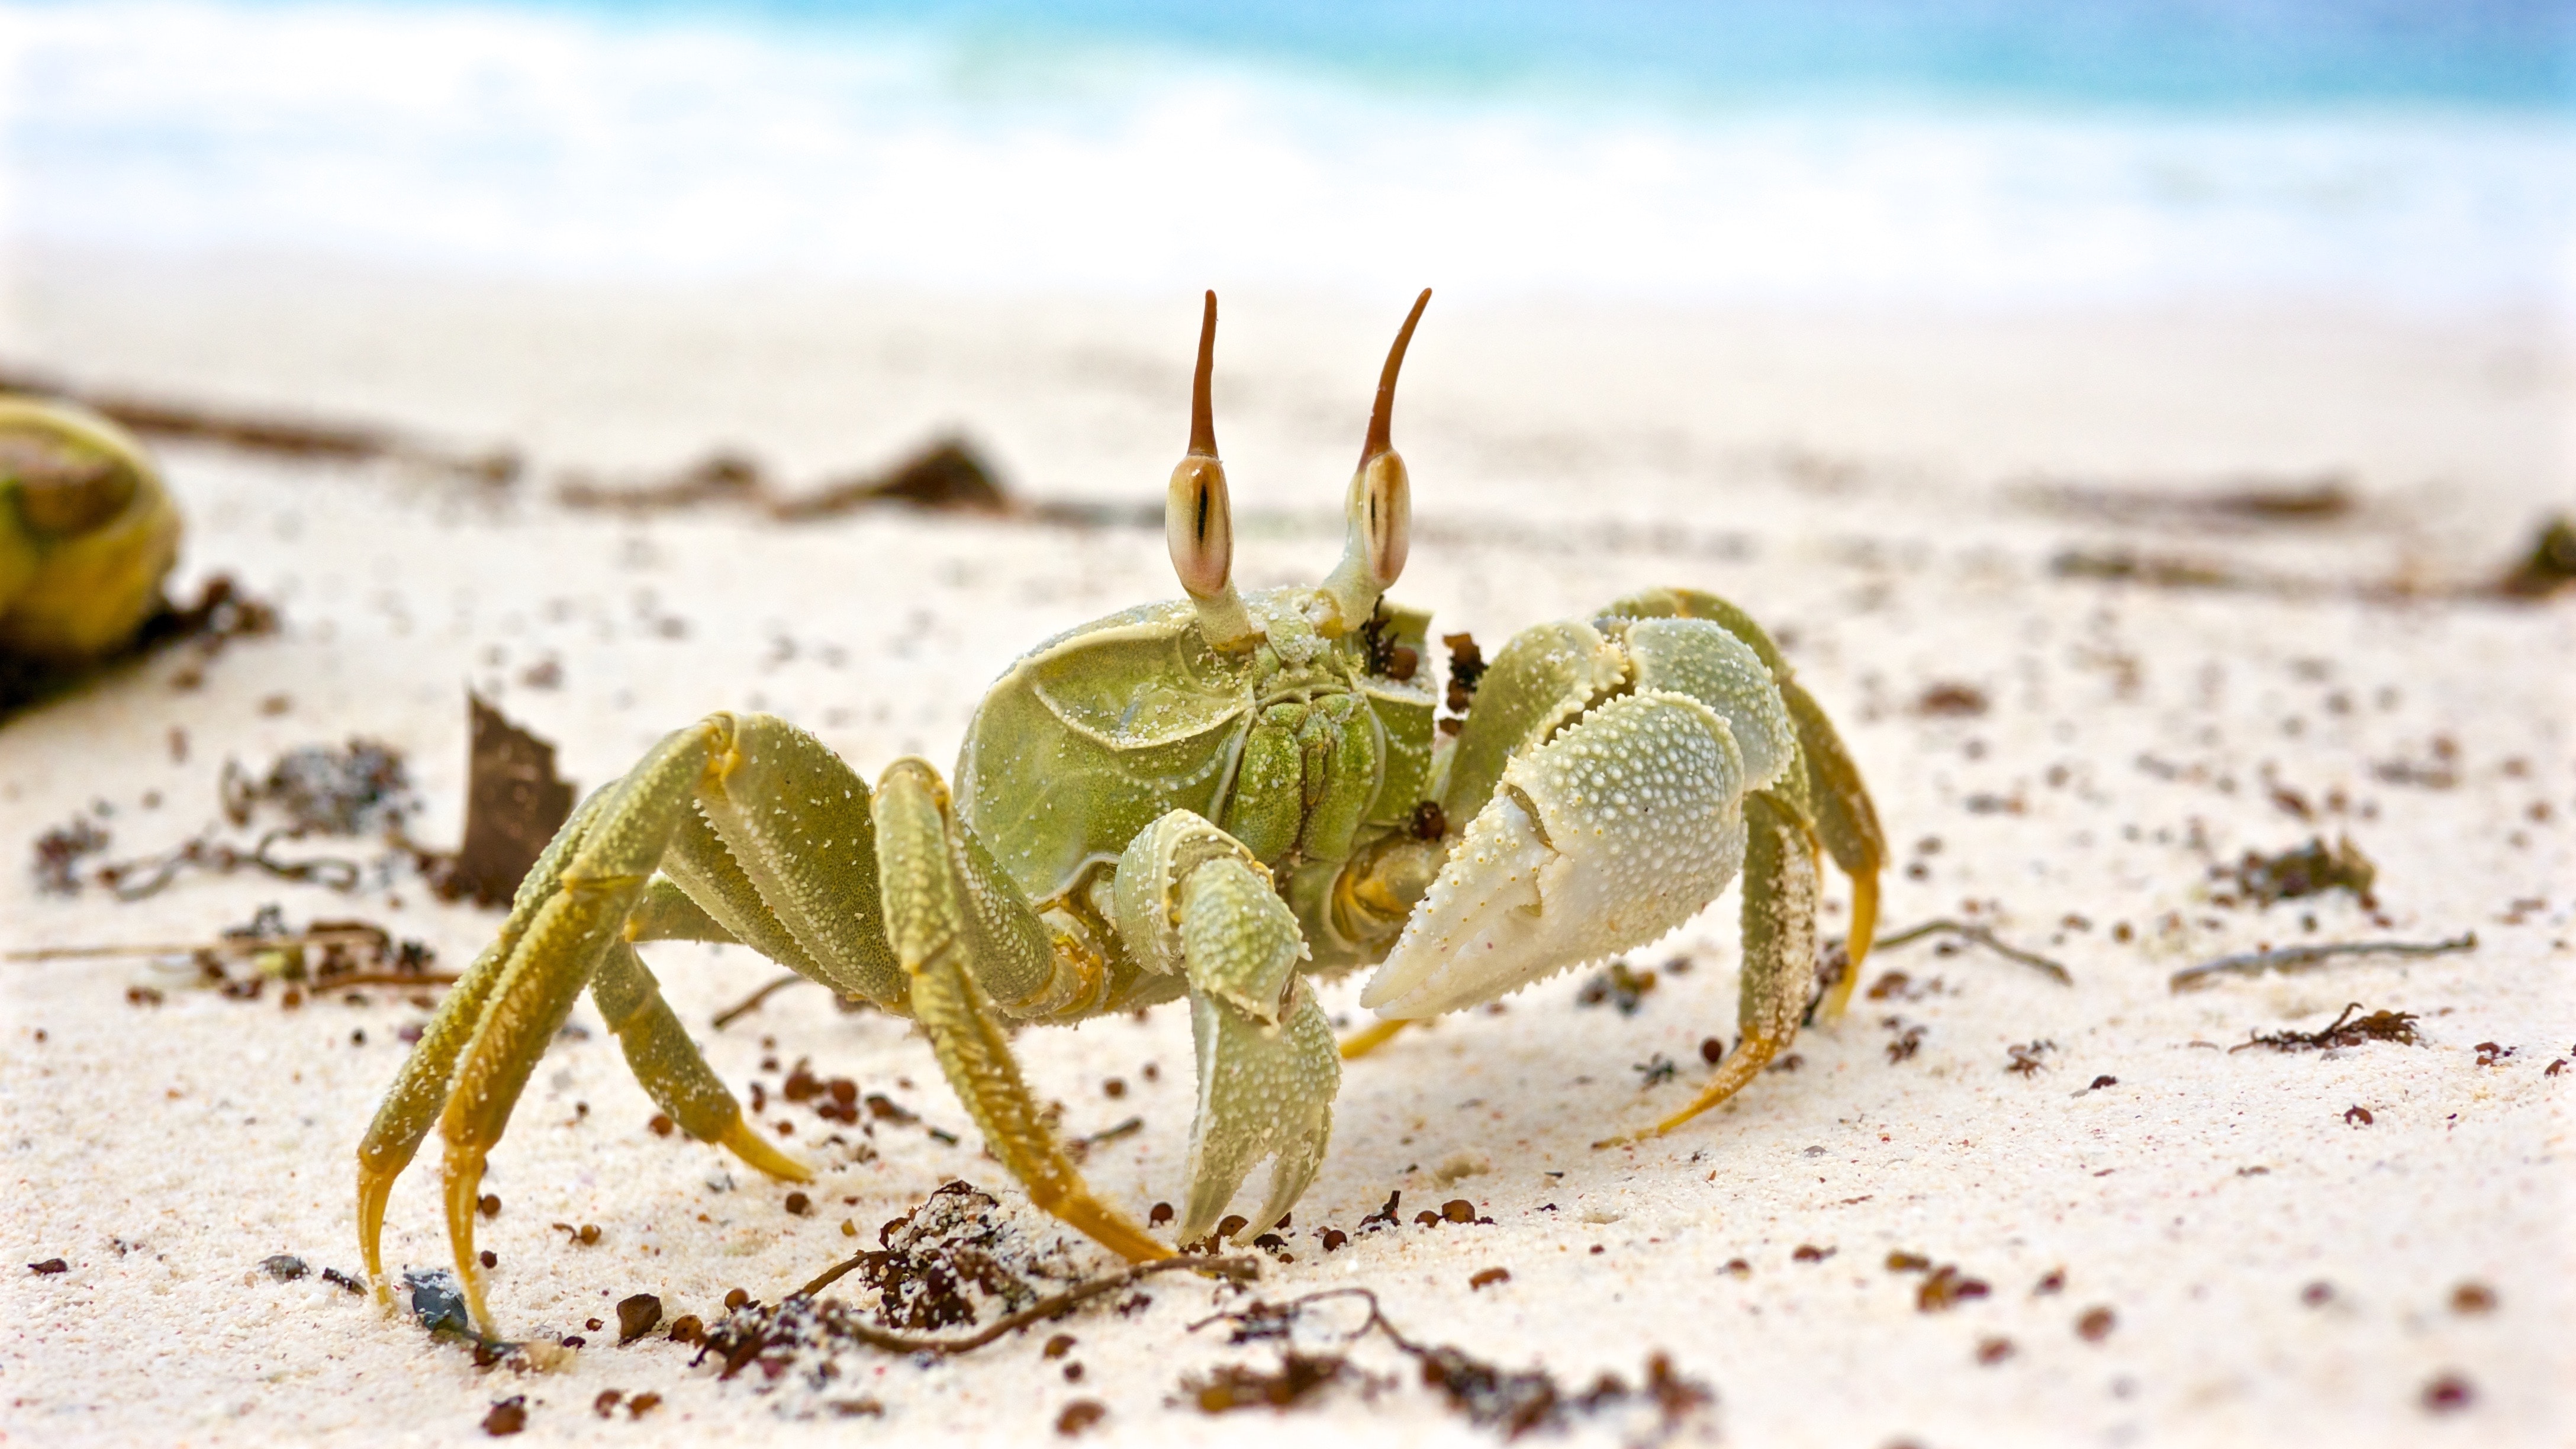 Crab on the beach. │ Source: Unsplash